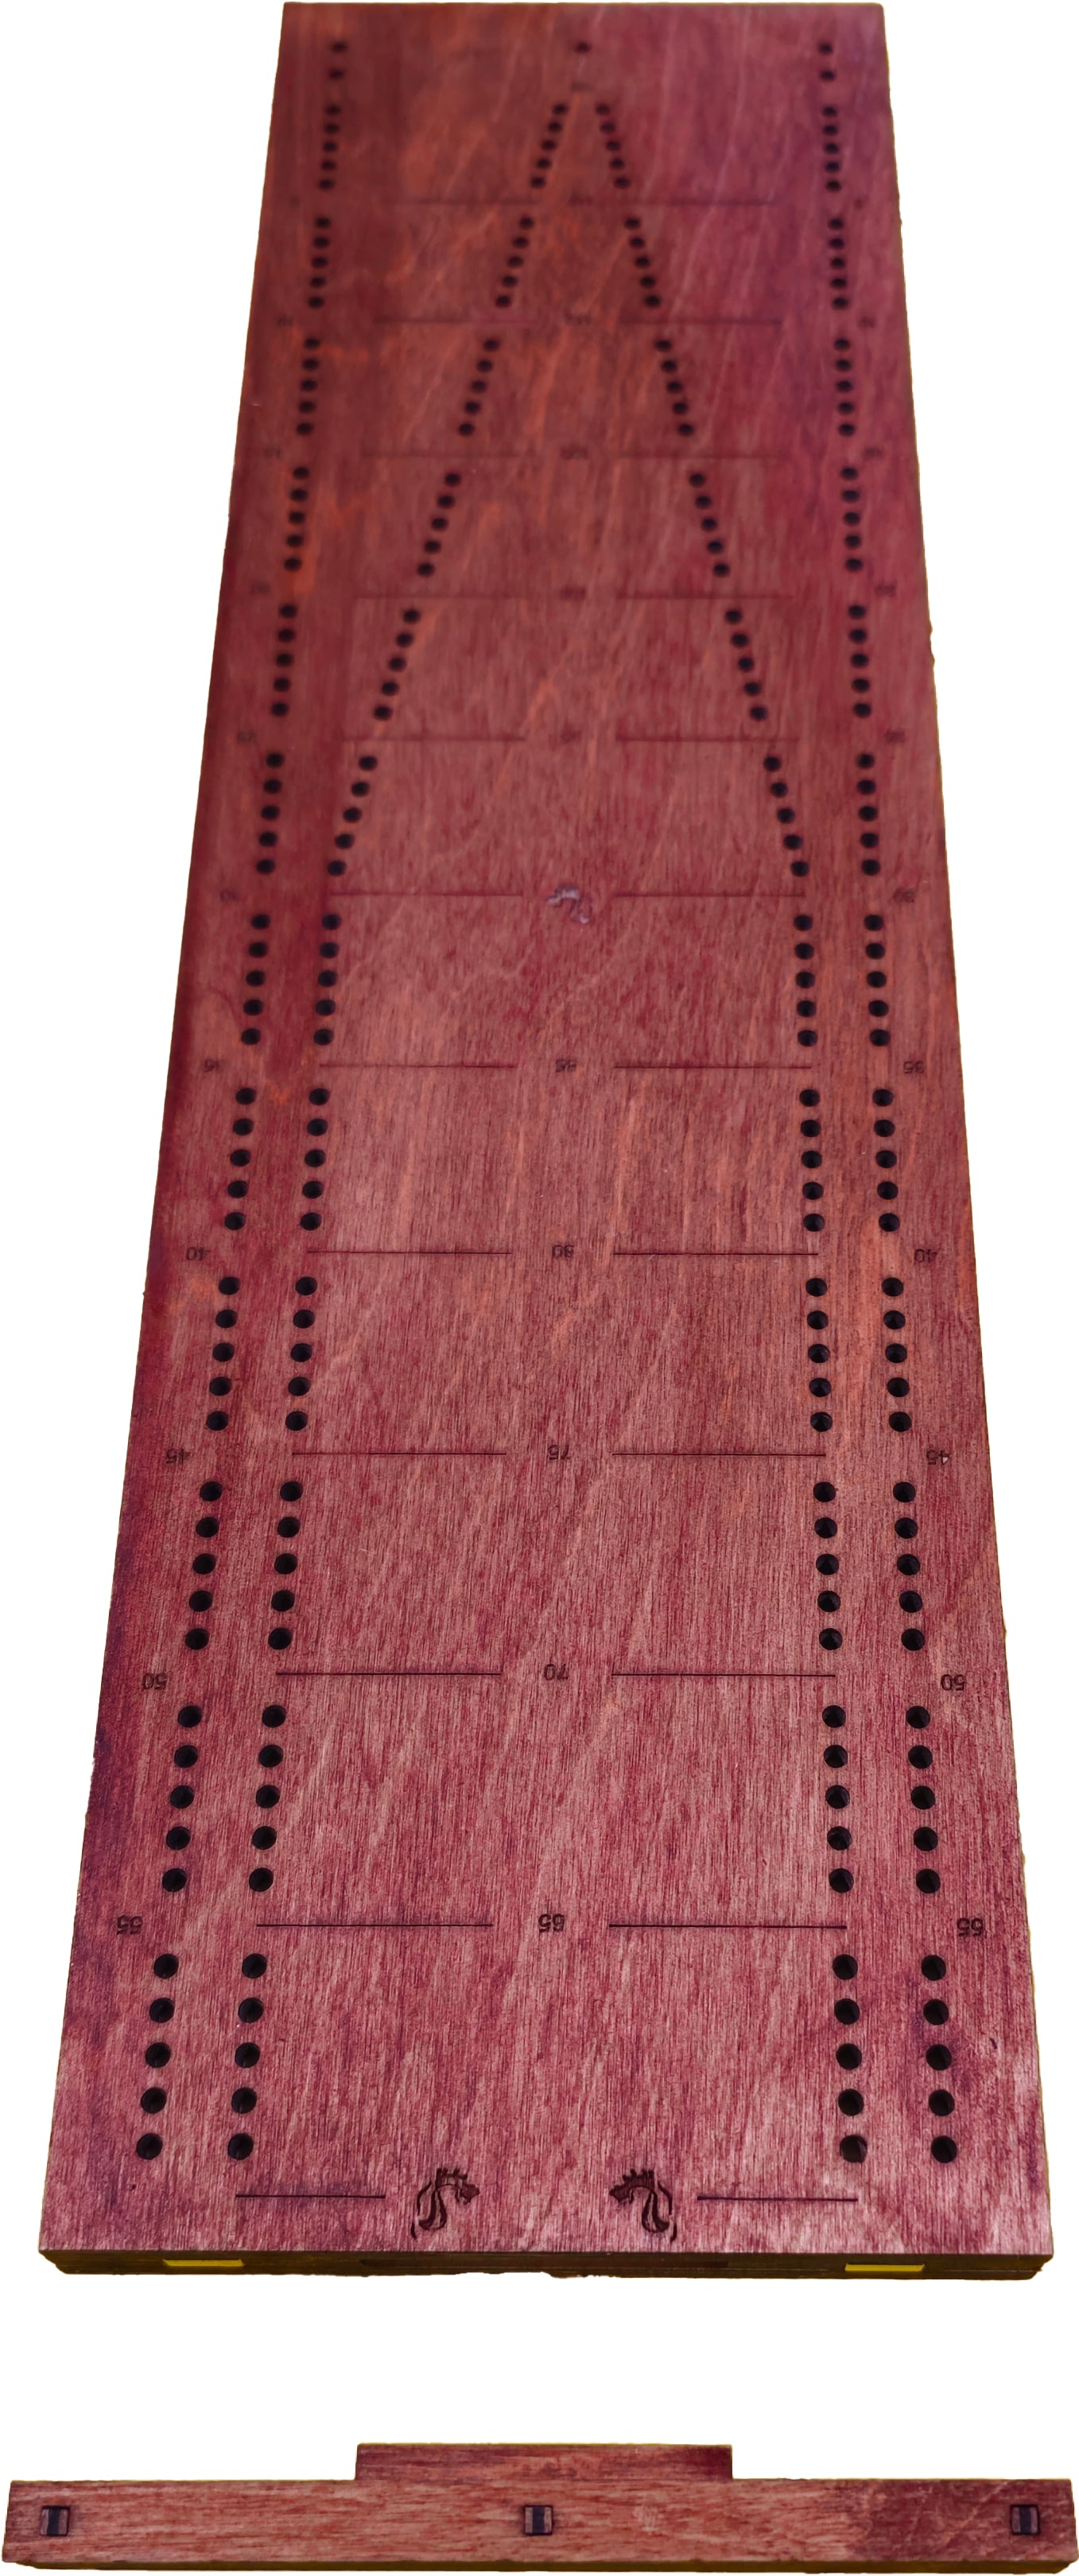 Tournament Cribbage Board